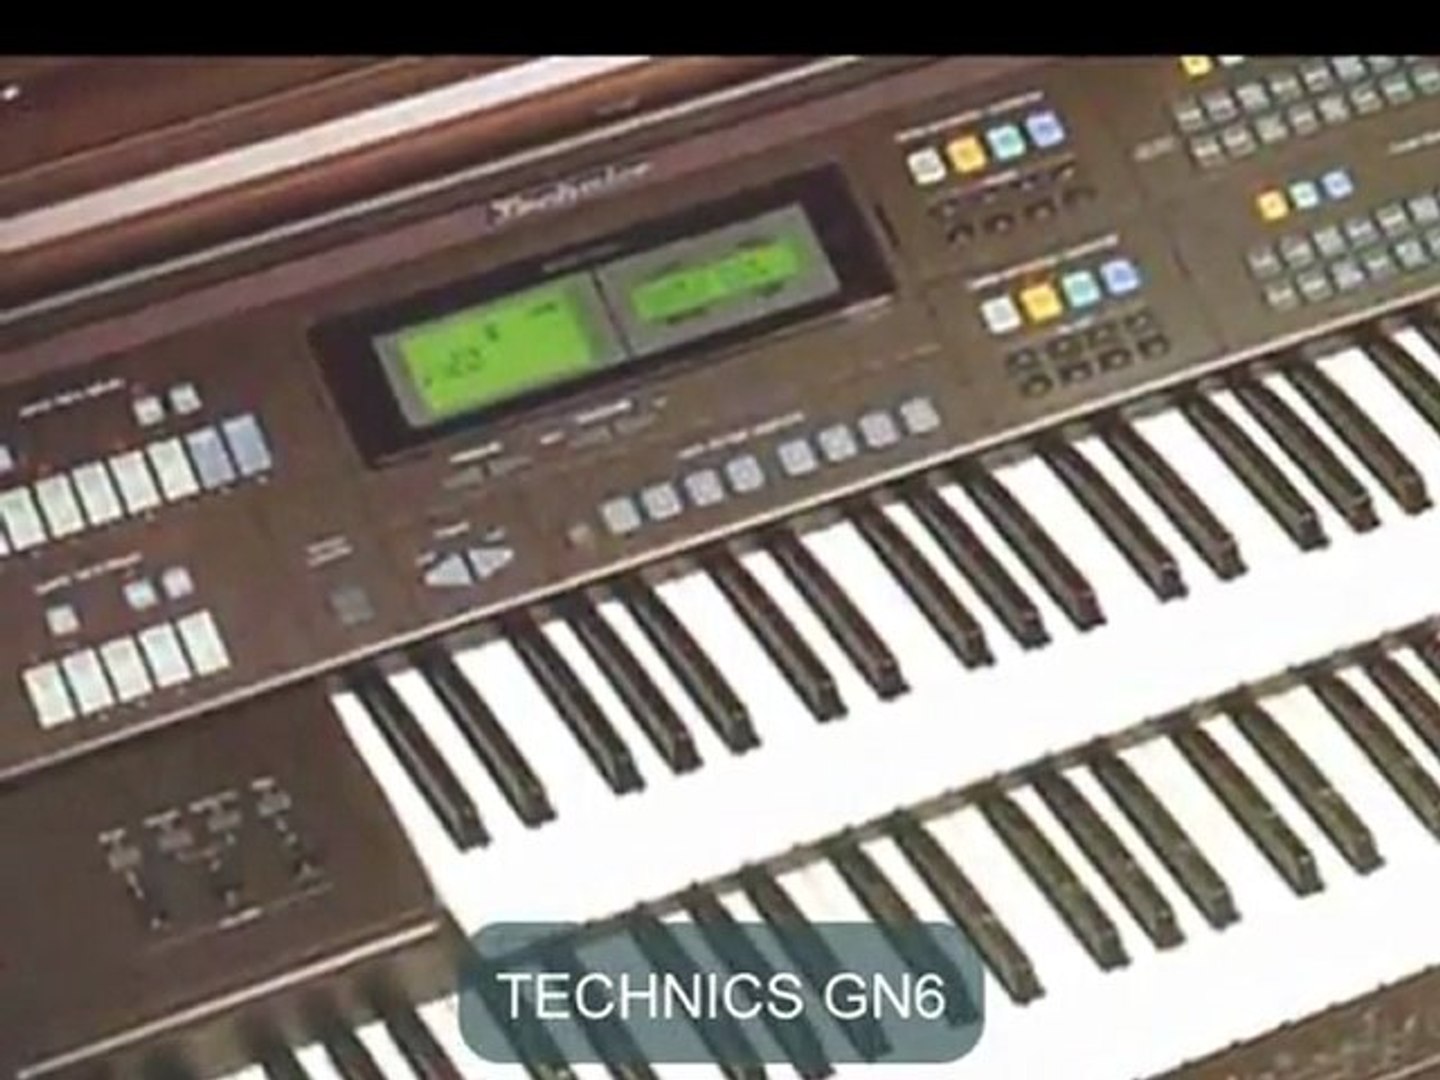 Technics Electric Organs UK Technics GA3 Technics EA5 Technics GN3 - video  Dailymotion